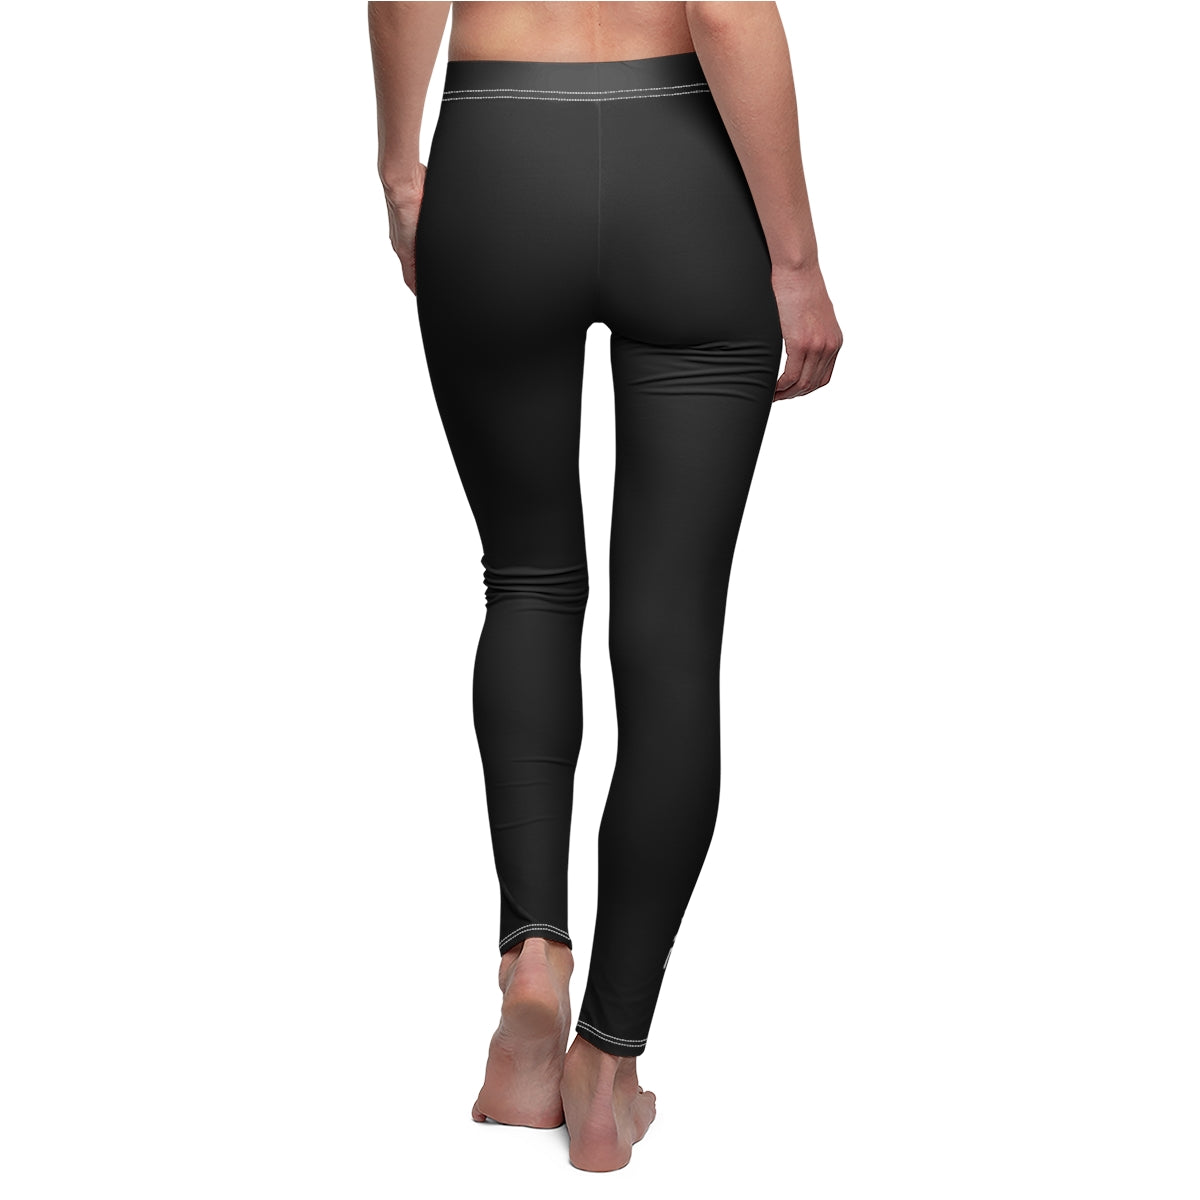 PIT LANE Women's track leggings carbon 2